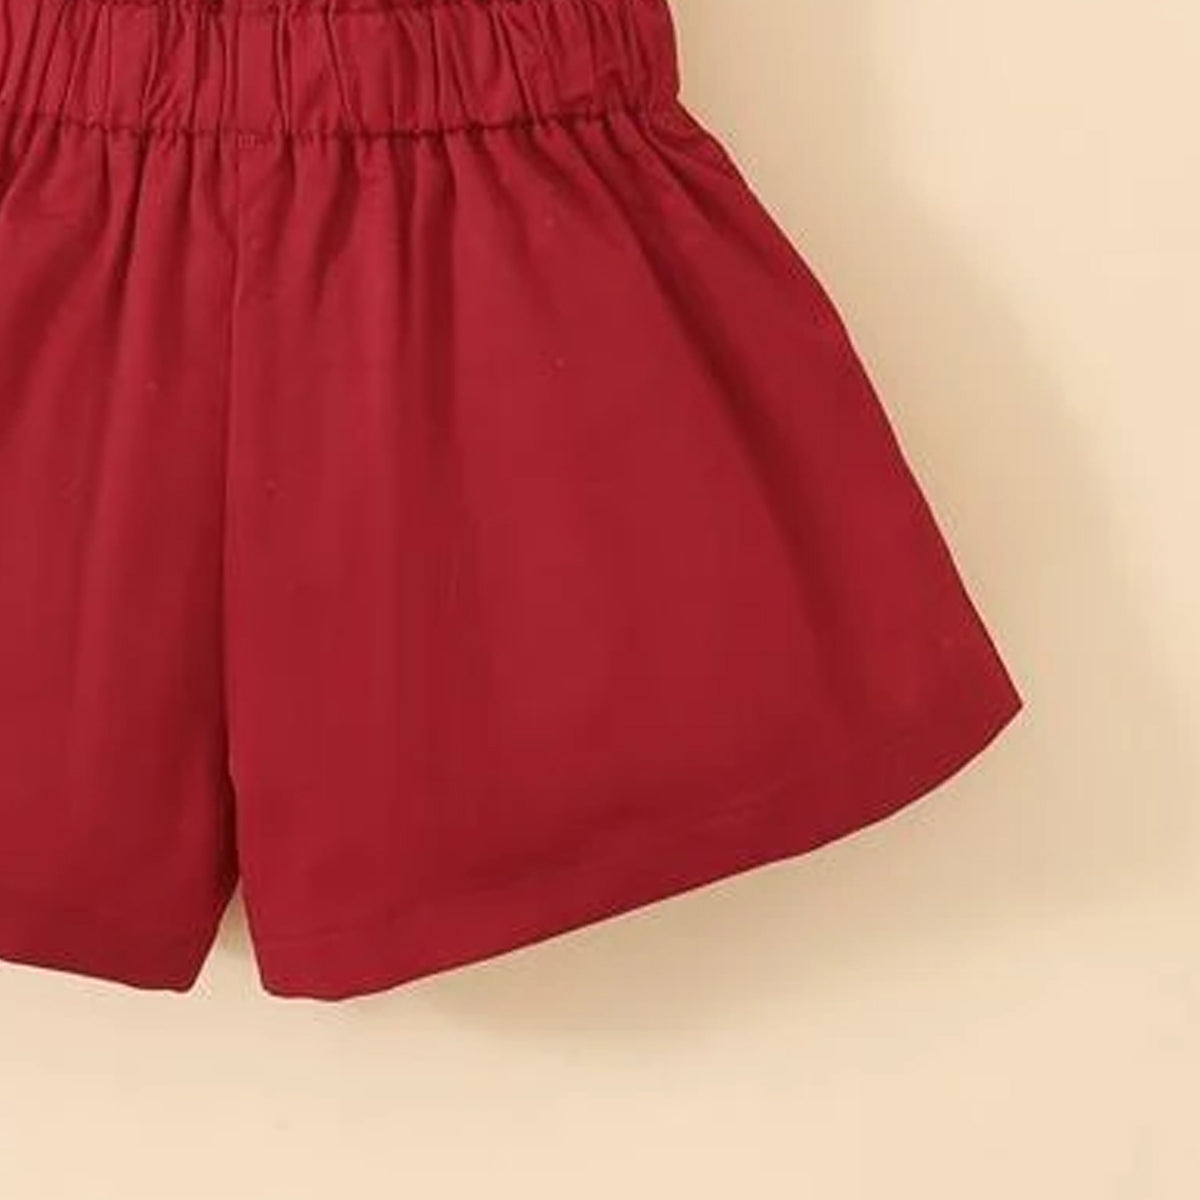 Toddler Girls Off-Shoulder Stylish Top & Shorts For Baby Girls.